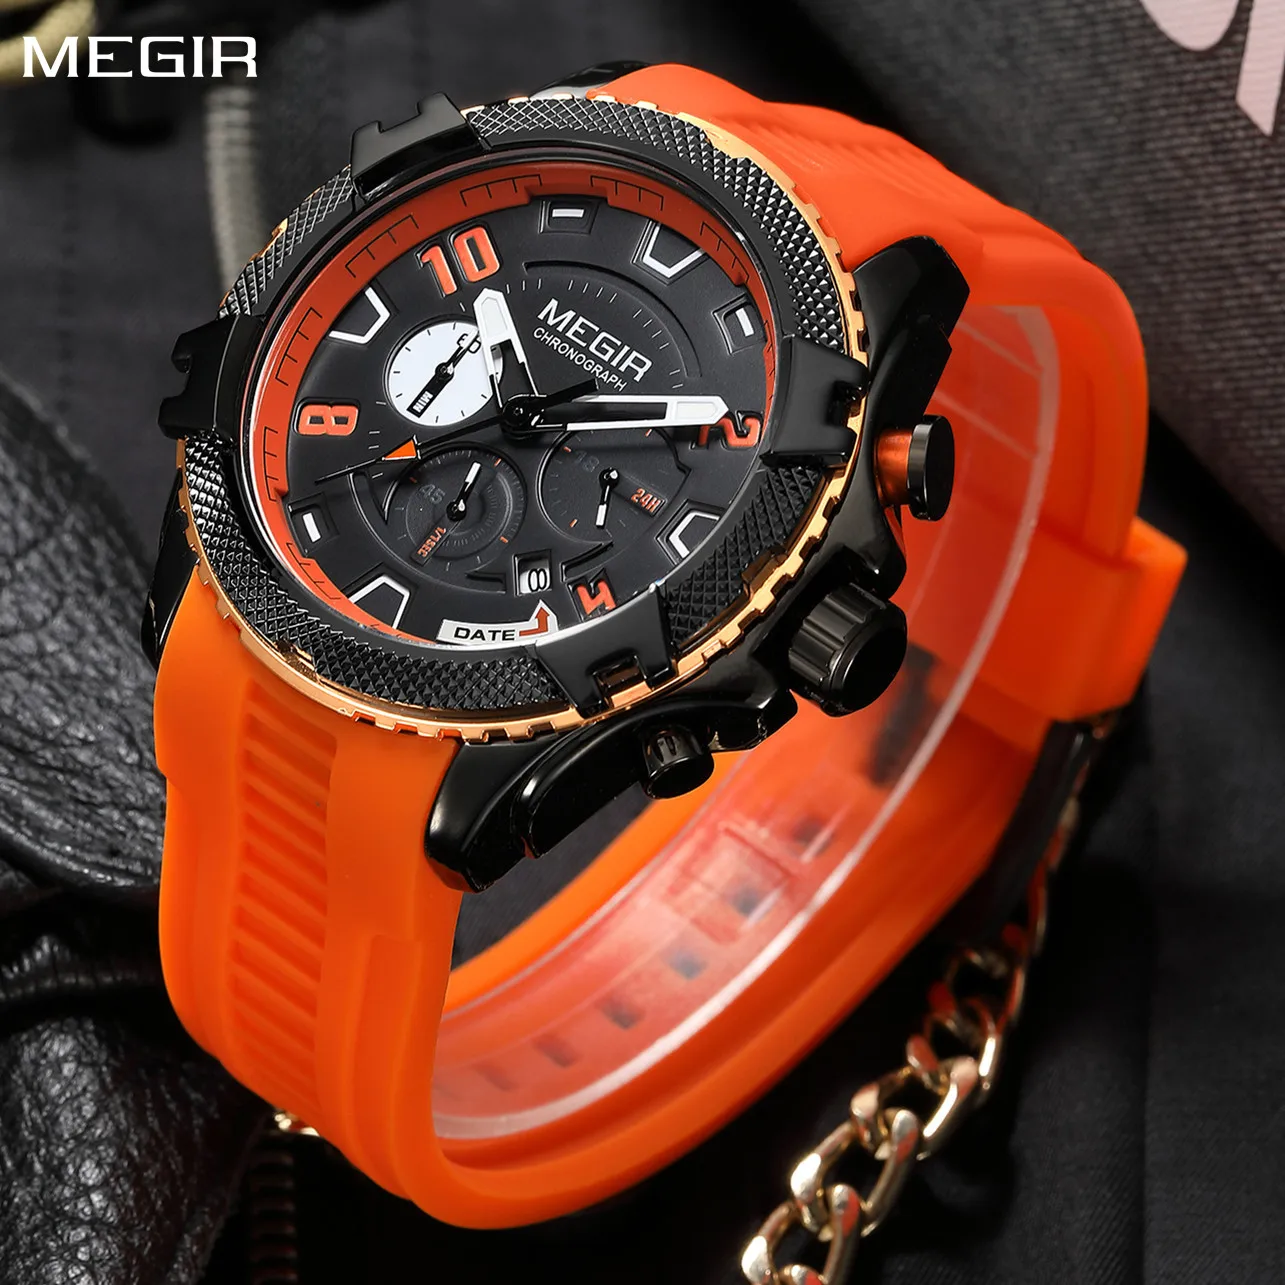 

MEGIR Luxury Men's Watches Fashion Sport Quartz Watch Waterproof Date Chronograph Military Wristwatches Clock Reloj Hombre 2200